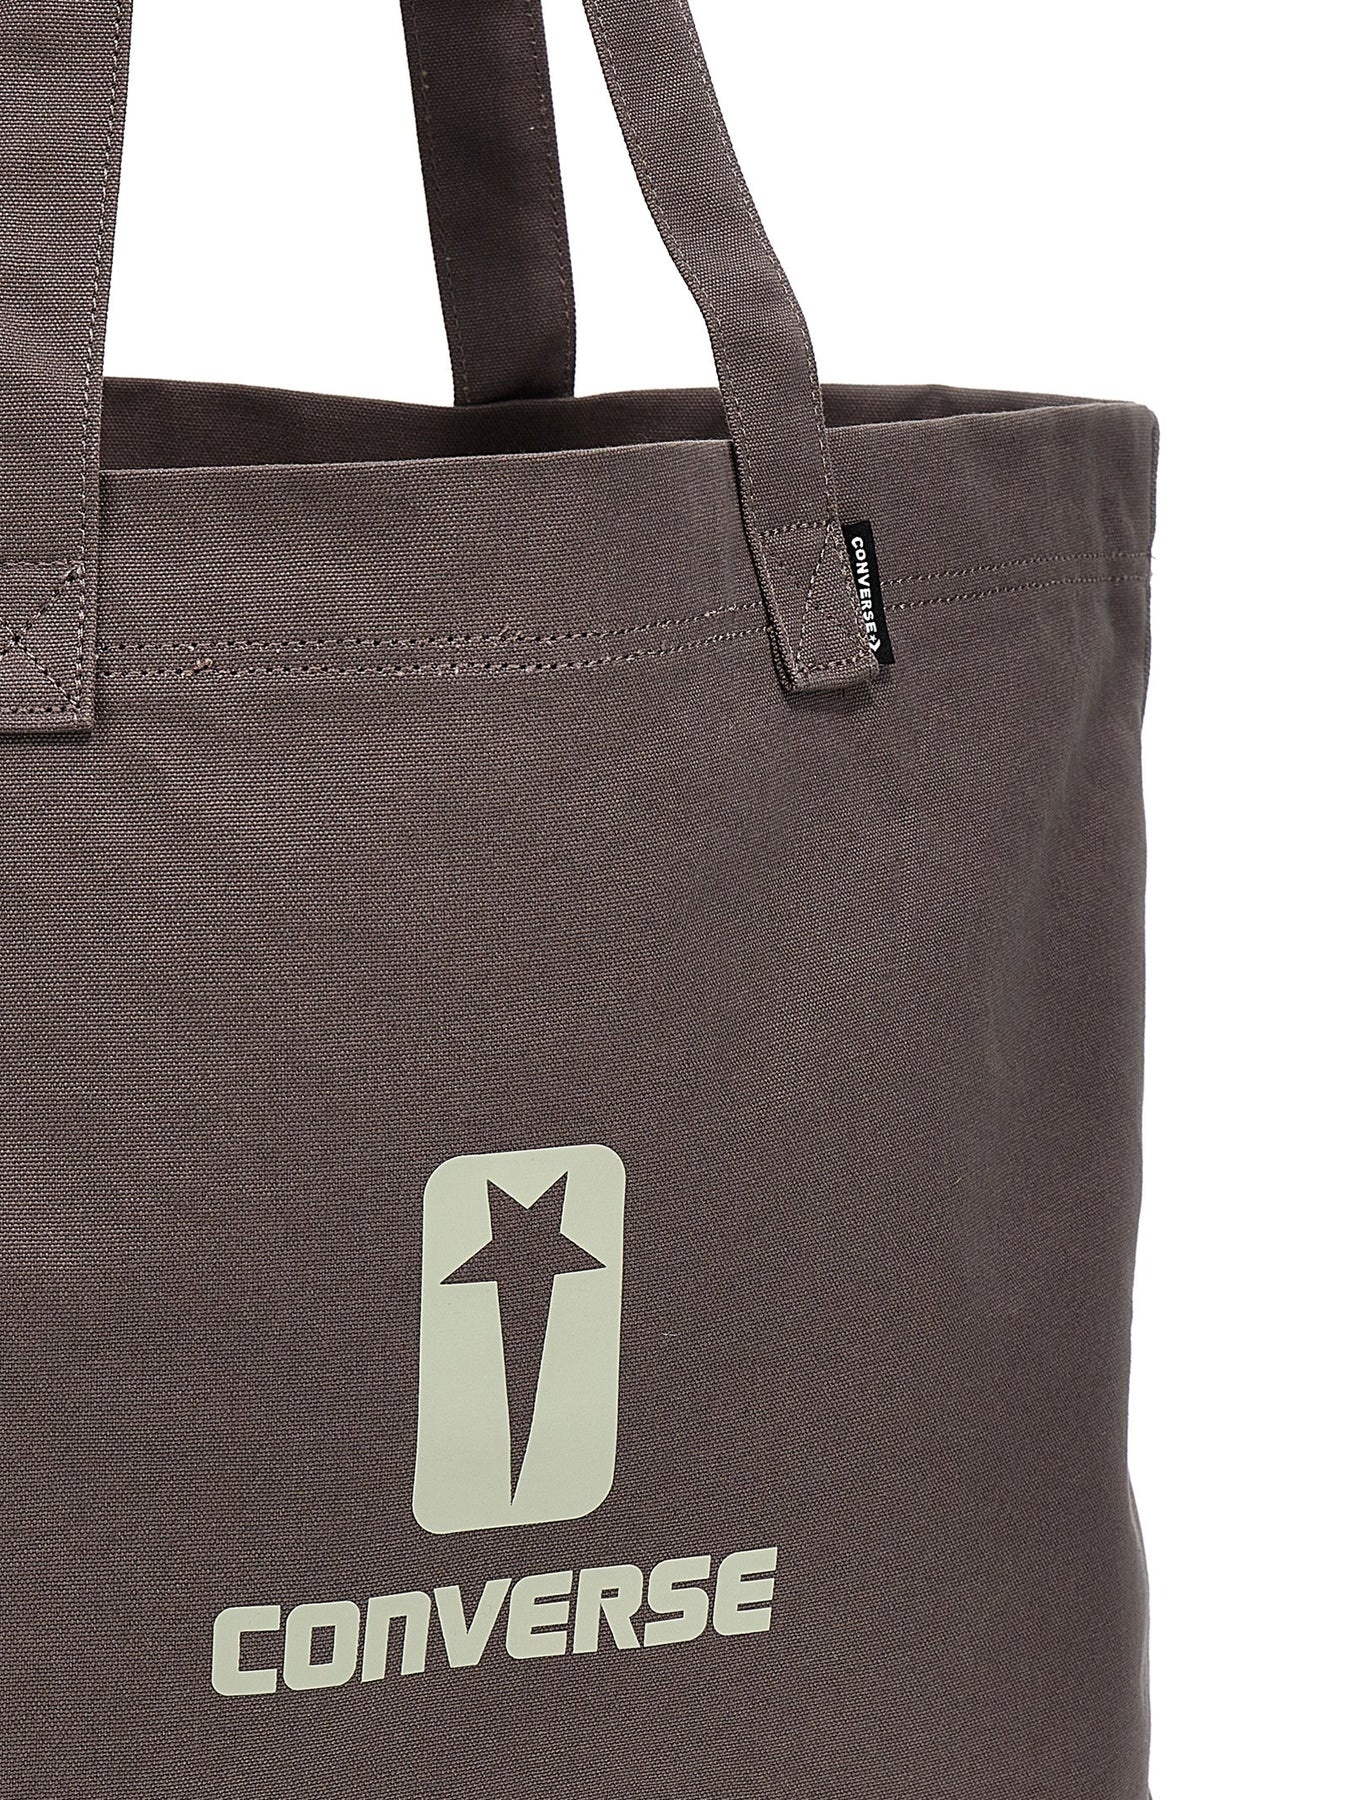 Drkshw X Converse Shopping Shopper Tote Bag Gray - 3